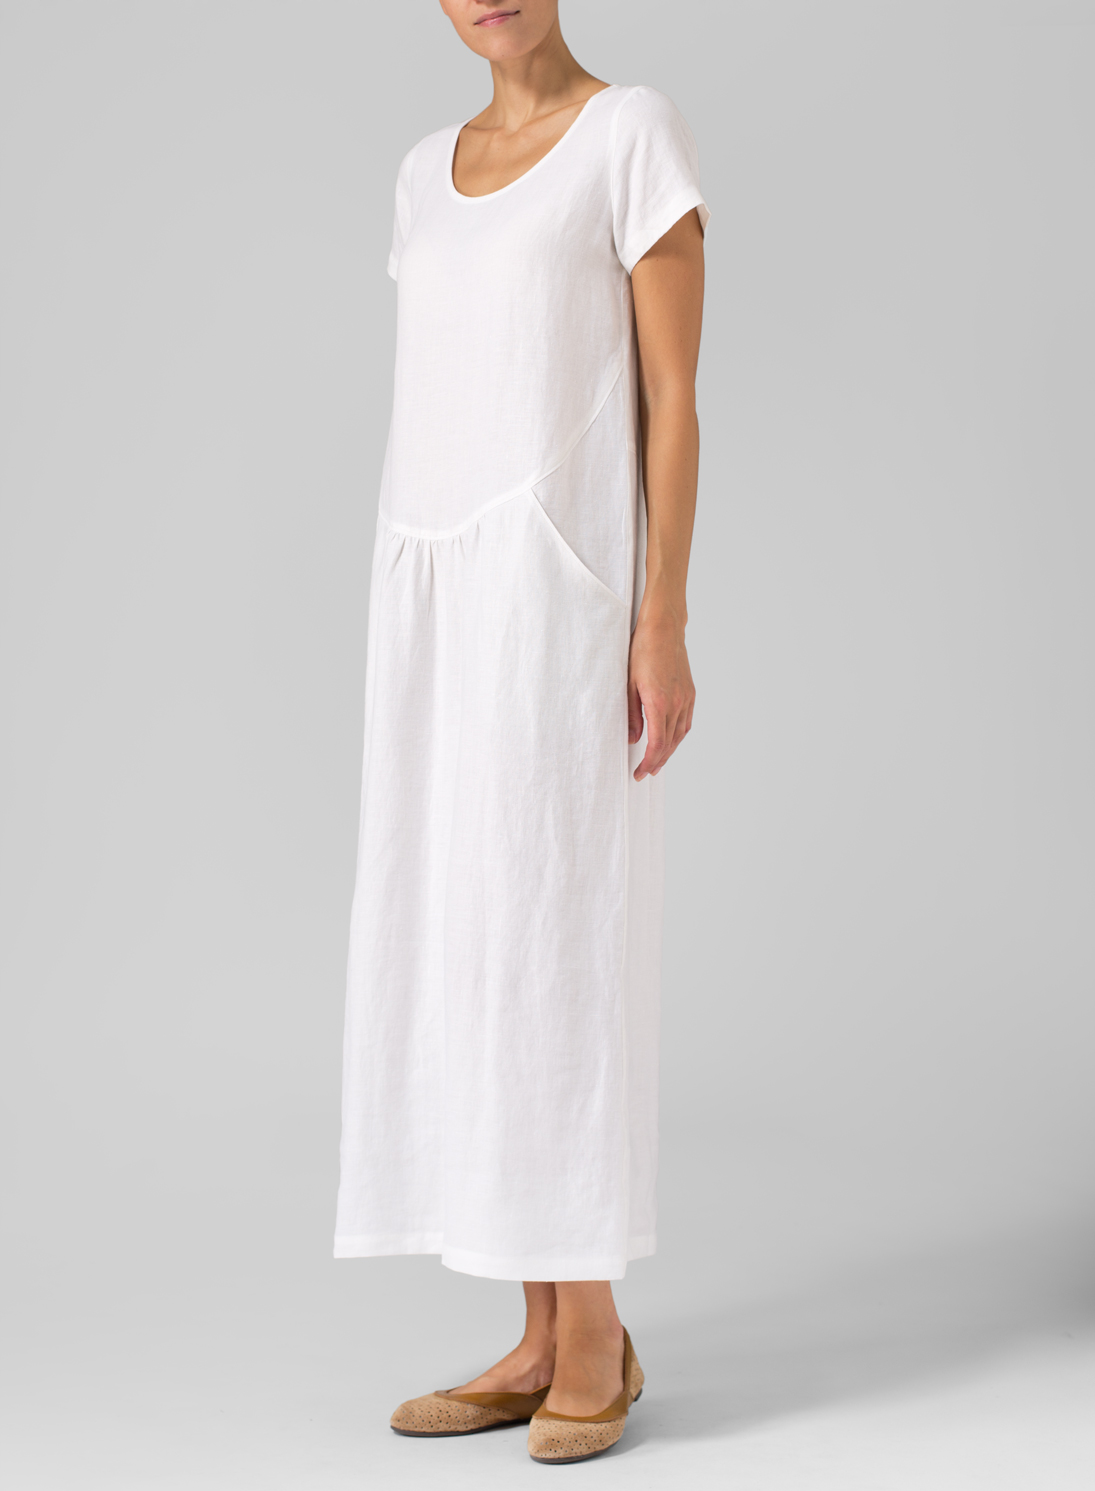 Linen Short Sleeve Dress - Plus Size